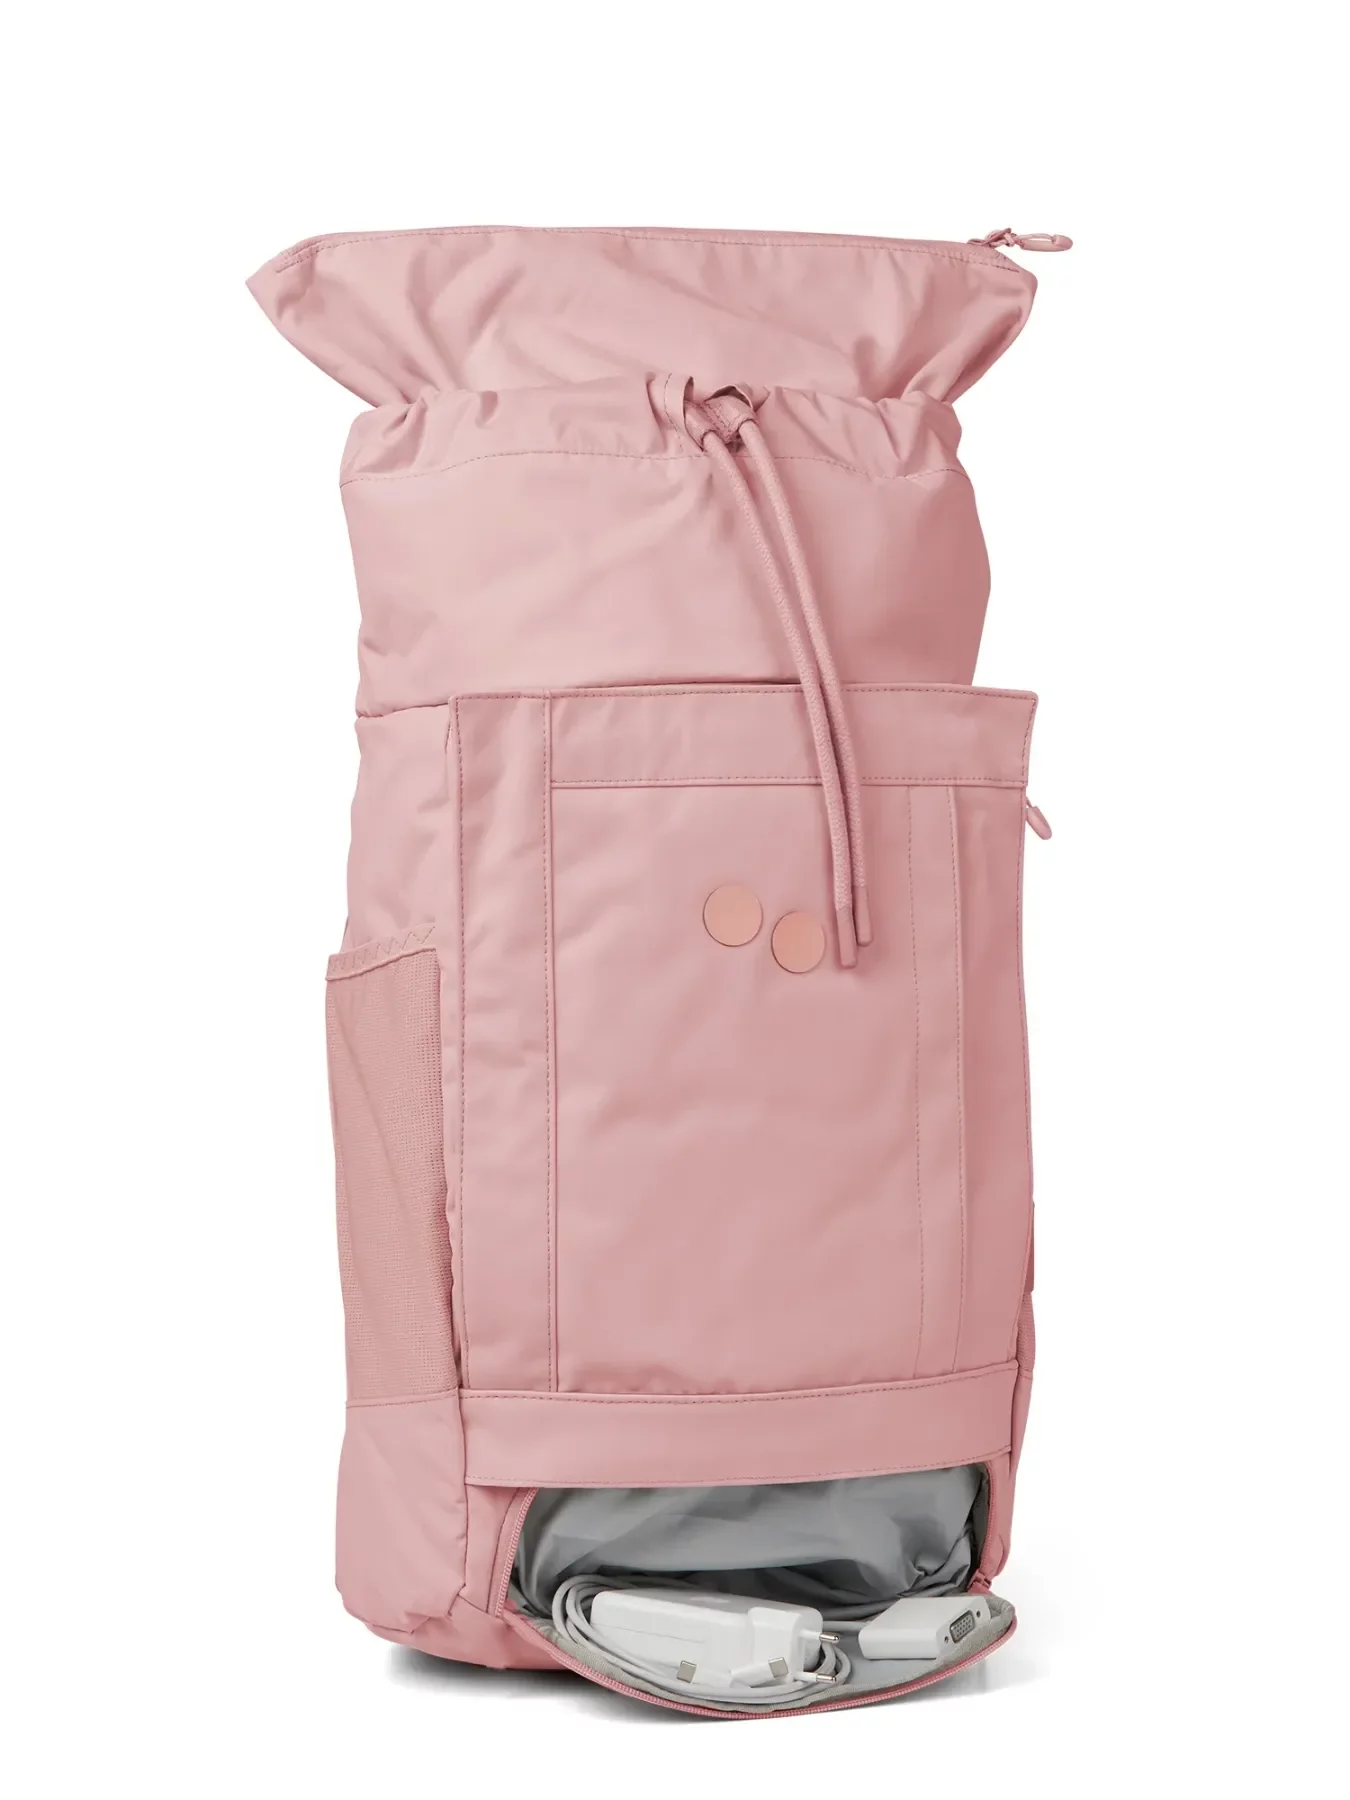 pinqponq Backpack BLOK medium - Ash Pink 7